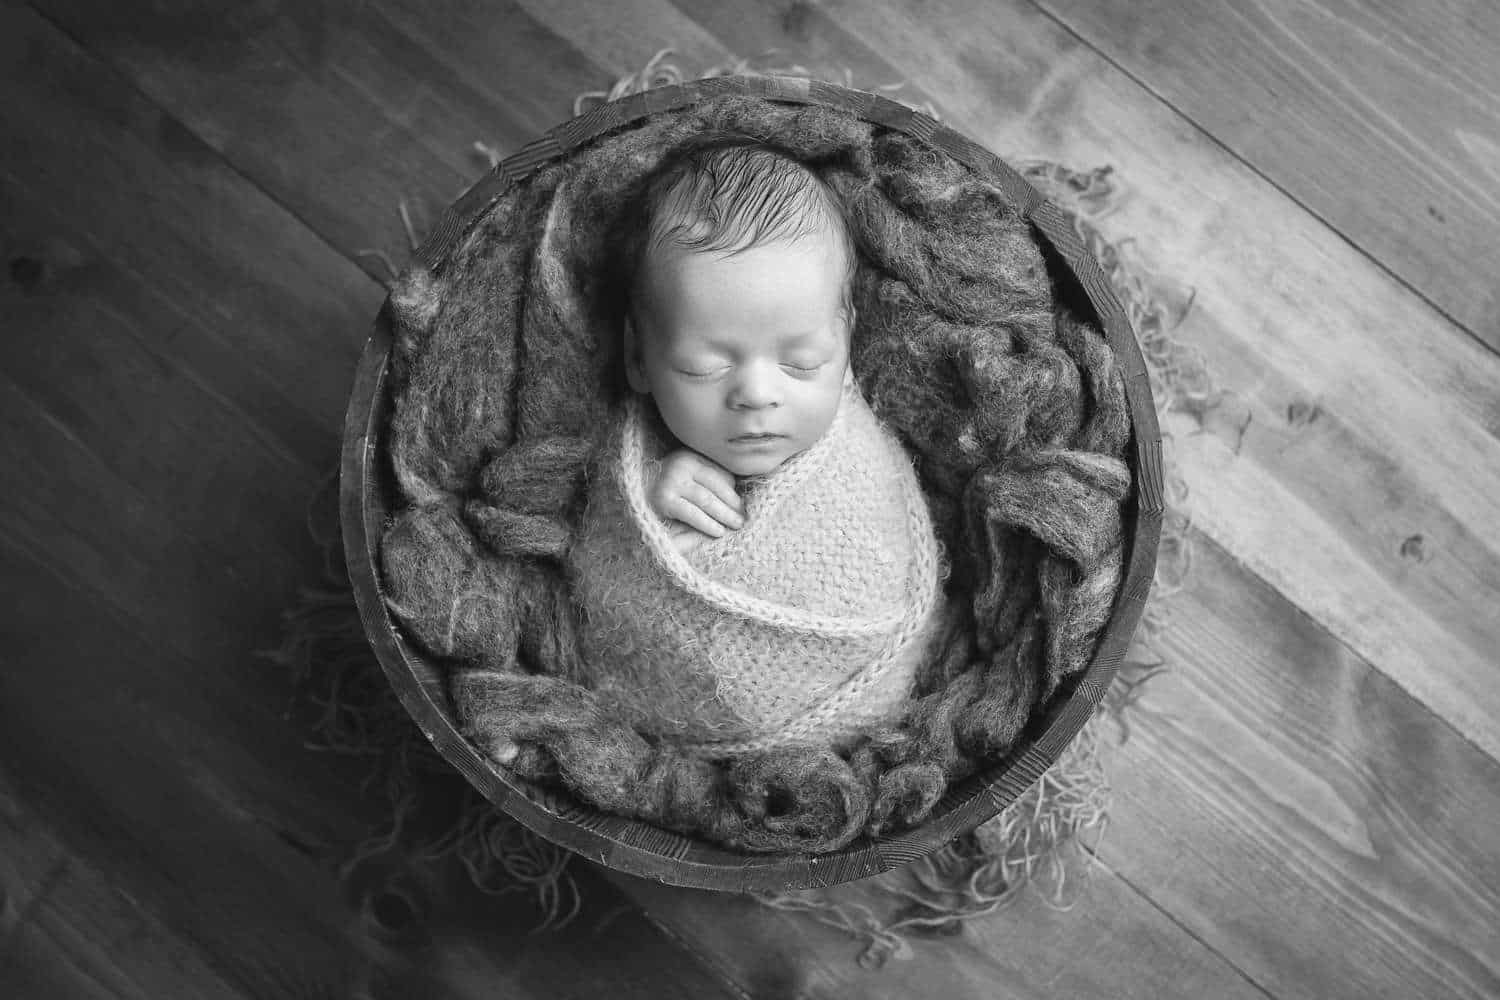 newborn photographer in rochester ny captures newborn baby boy asleep in a bucket